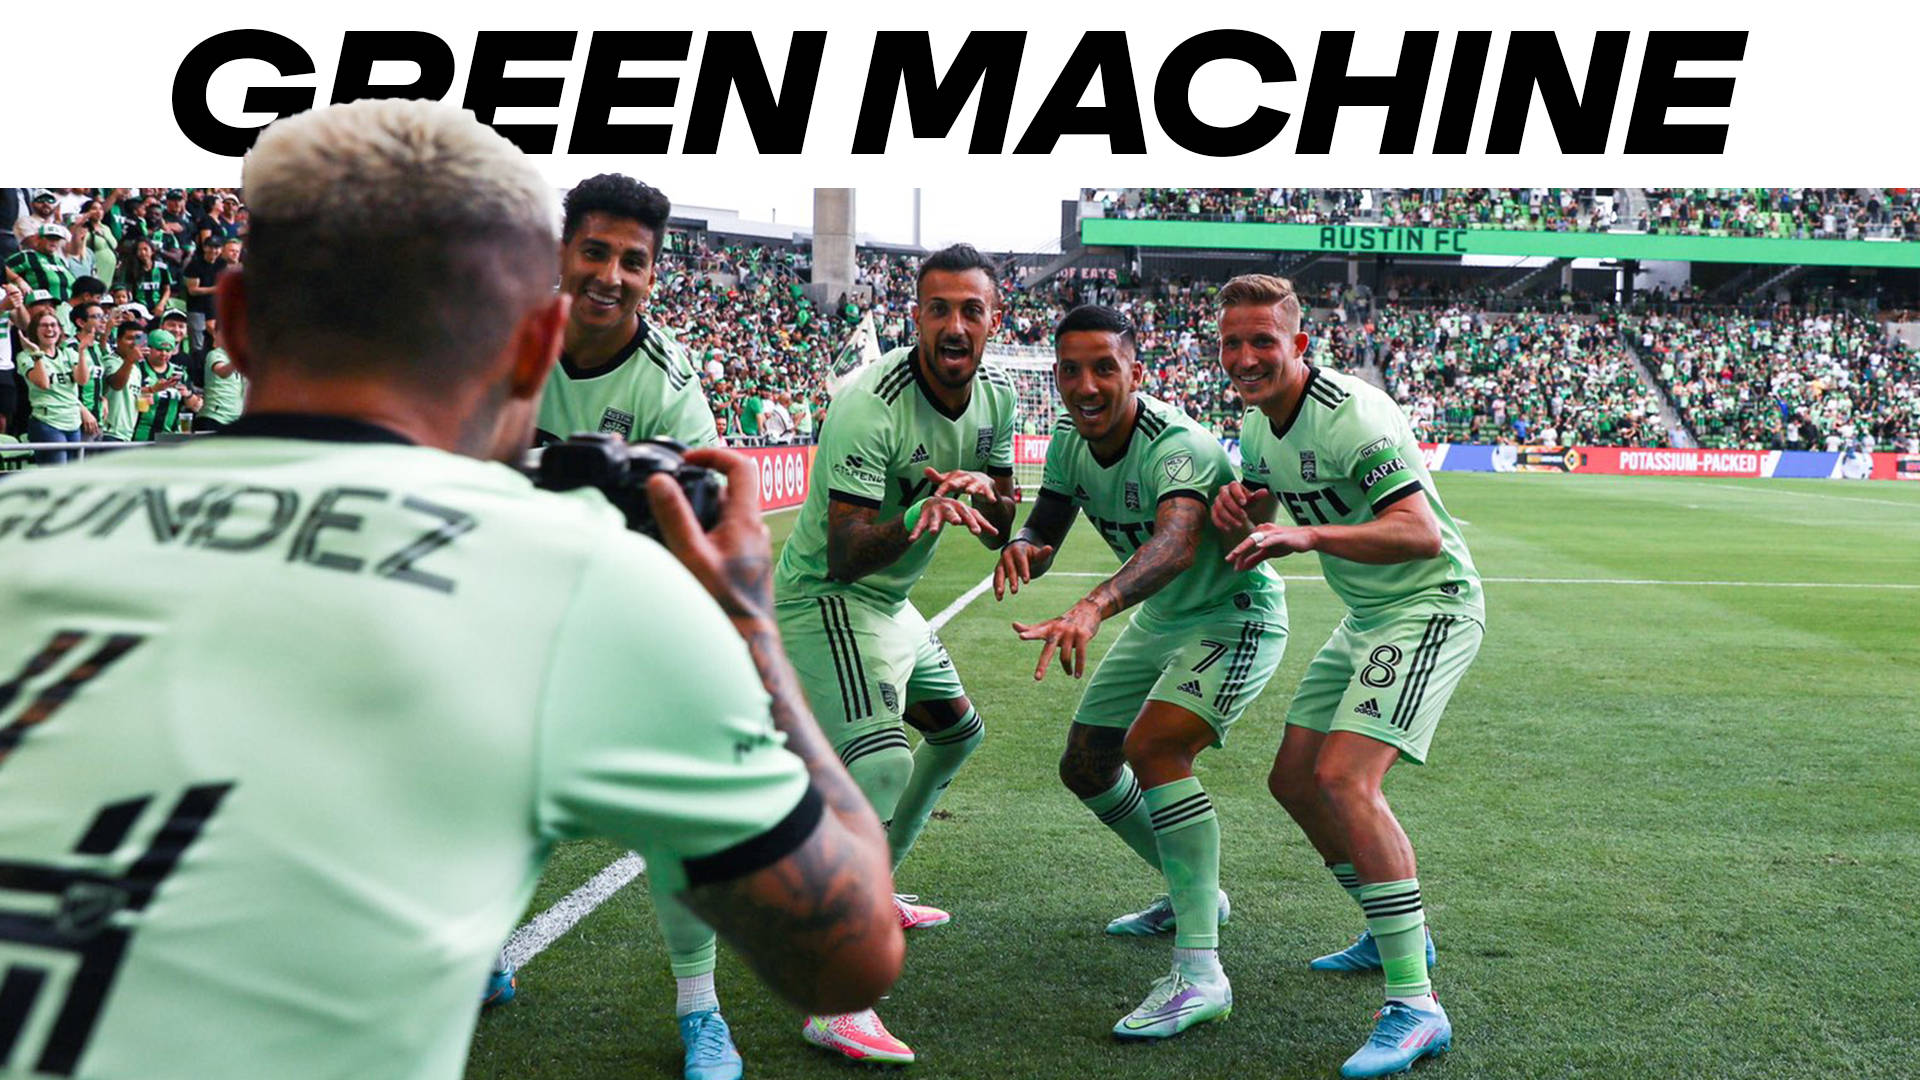 Austin Fc Team Green Machine Football Game Wallpaper